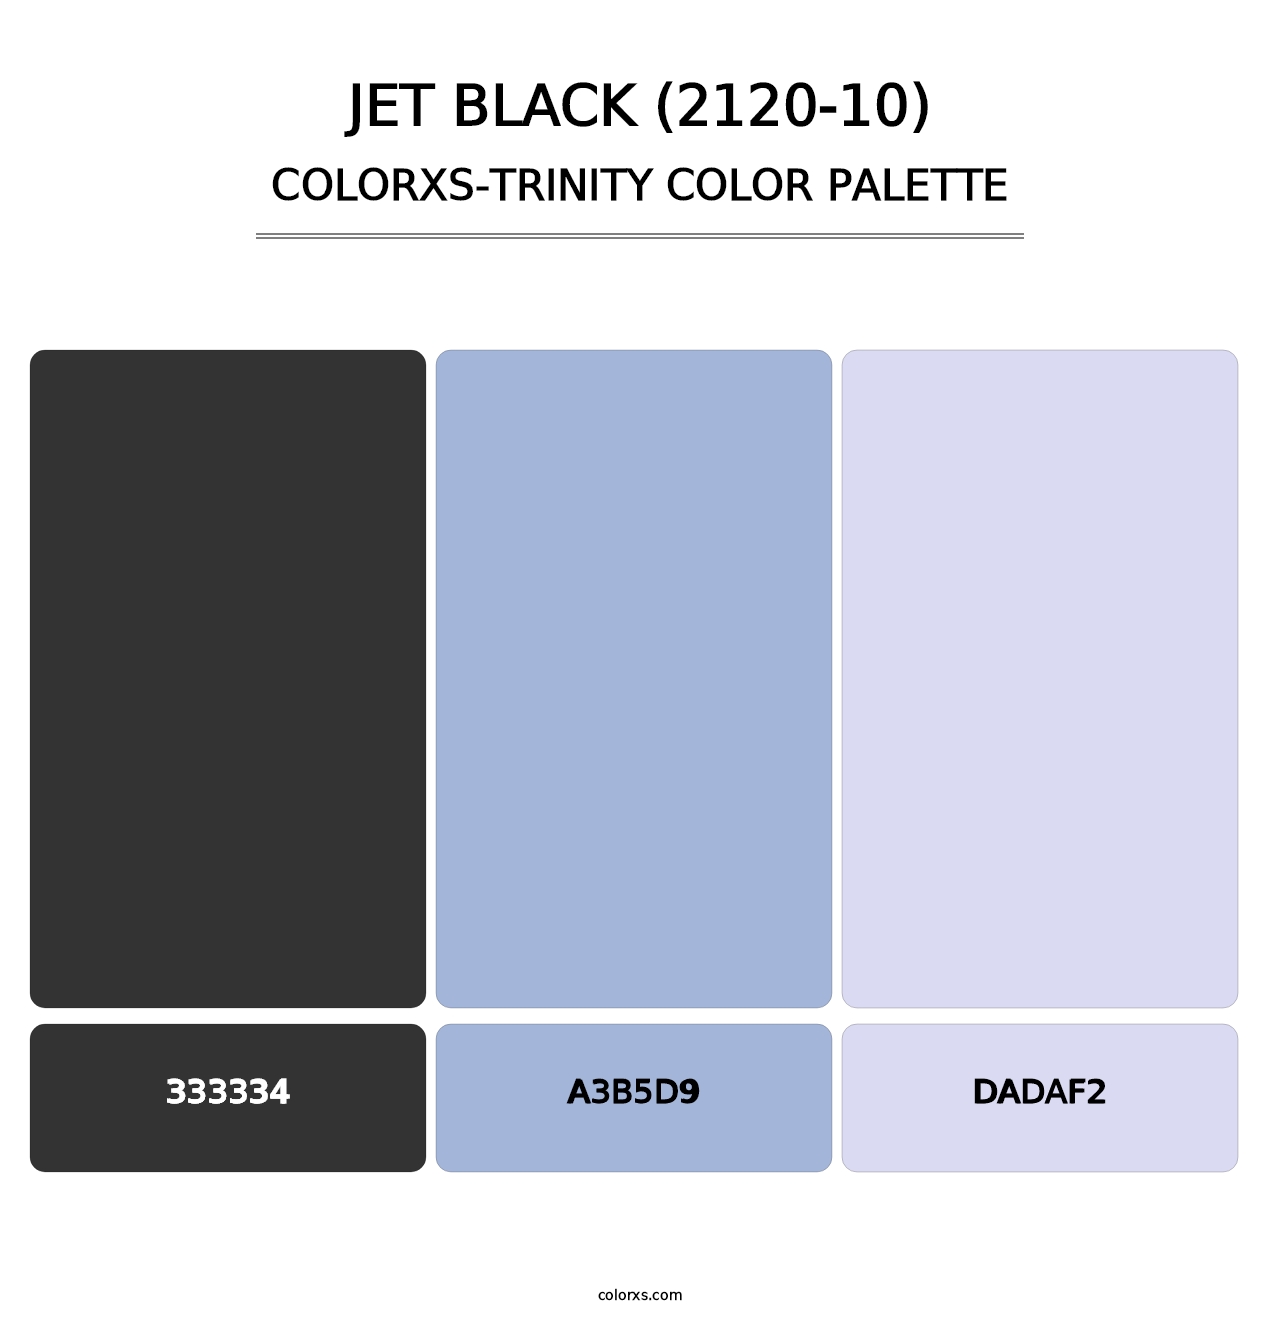 Jet Black (2120-10) - Colorxs Trinity Palette